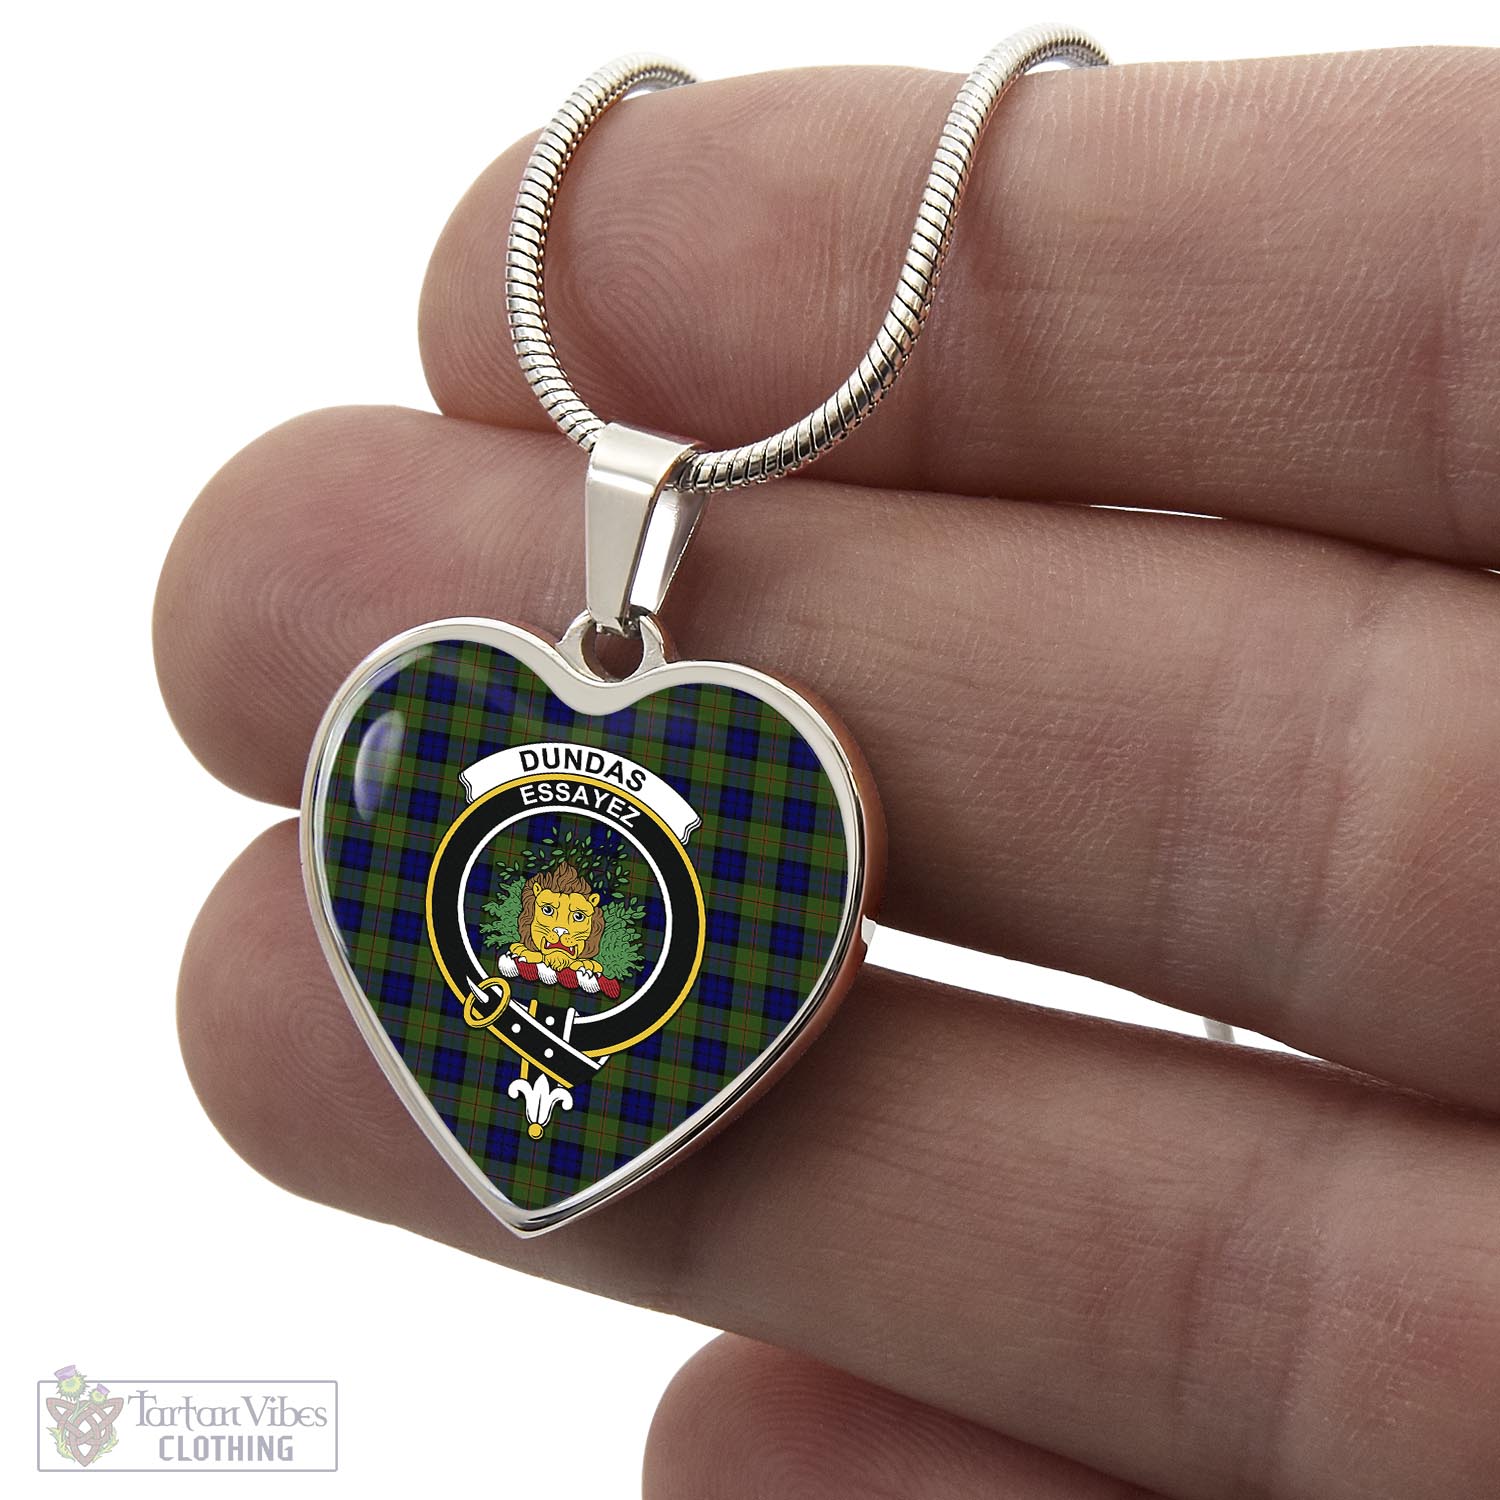 Tartan Vibes Clothing Dundas Modern Tartan Heart Necklace with Family Crest